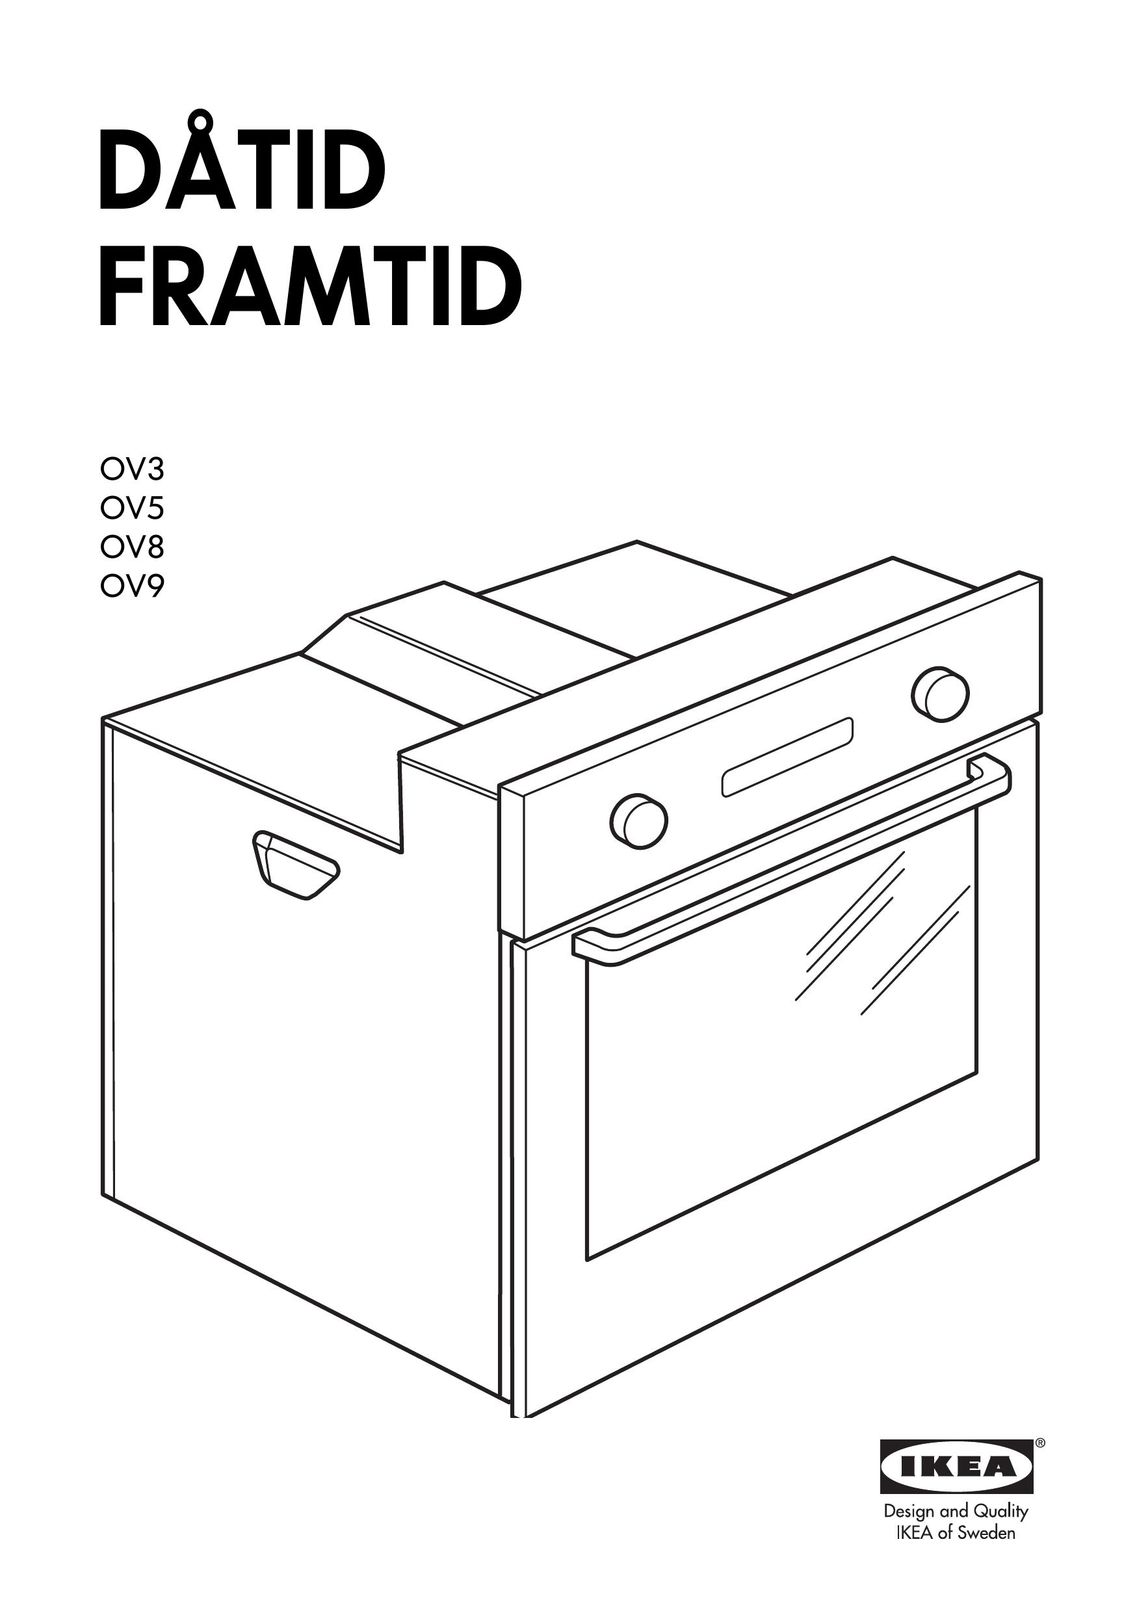 IKEA OV8 Double Oven User Manual